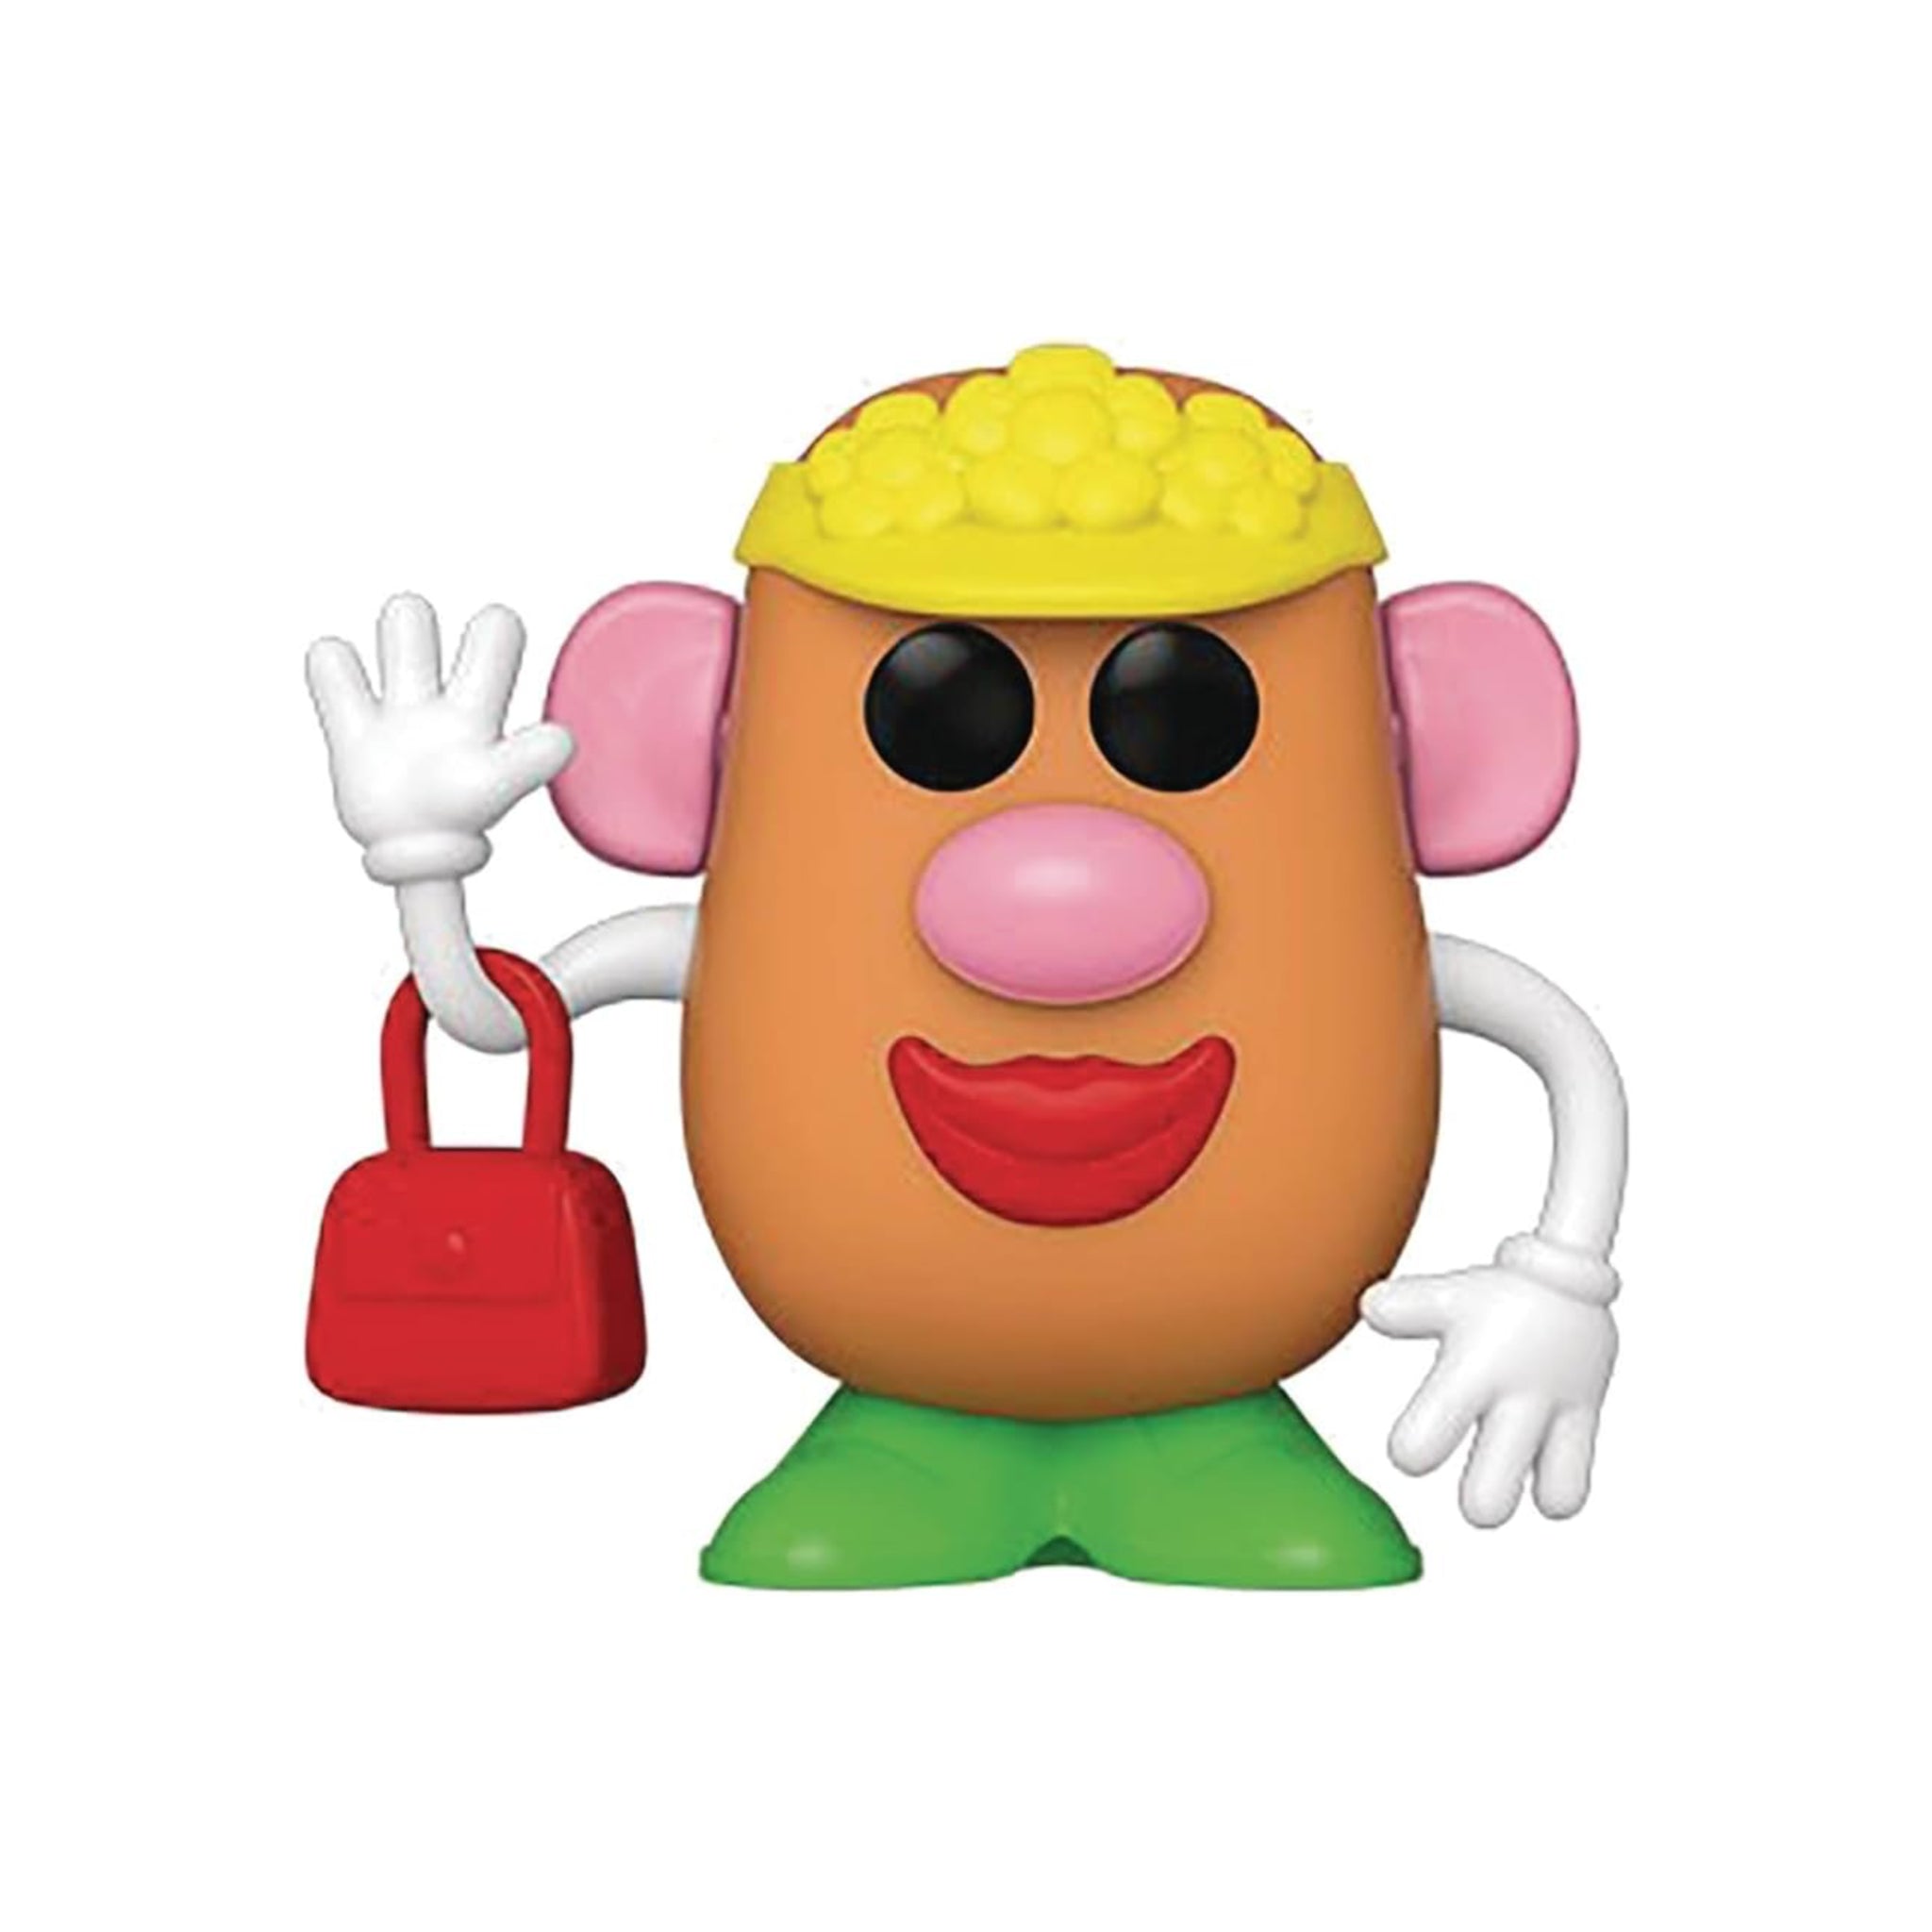 Mrs. Potato Head Funko Pop!